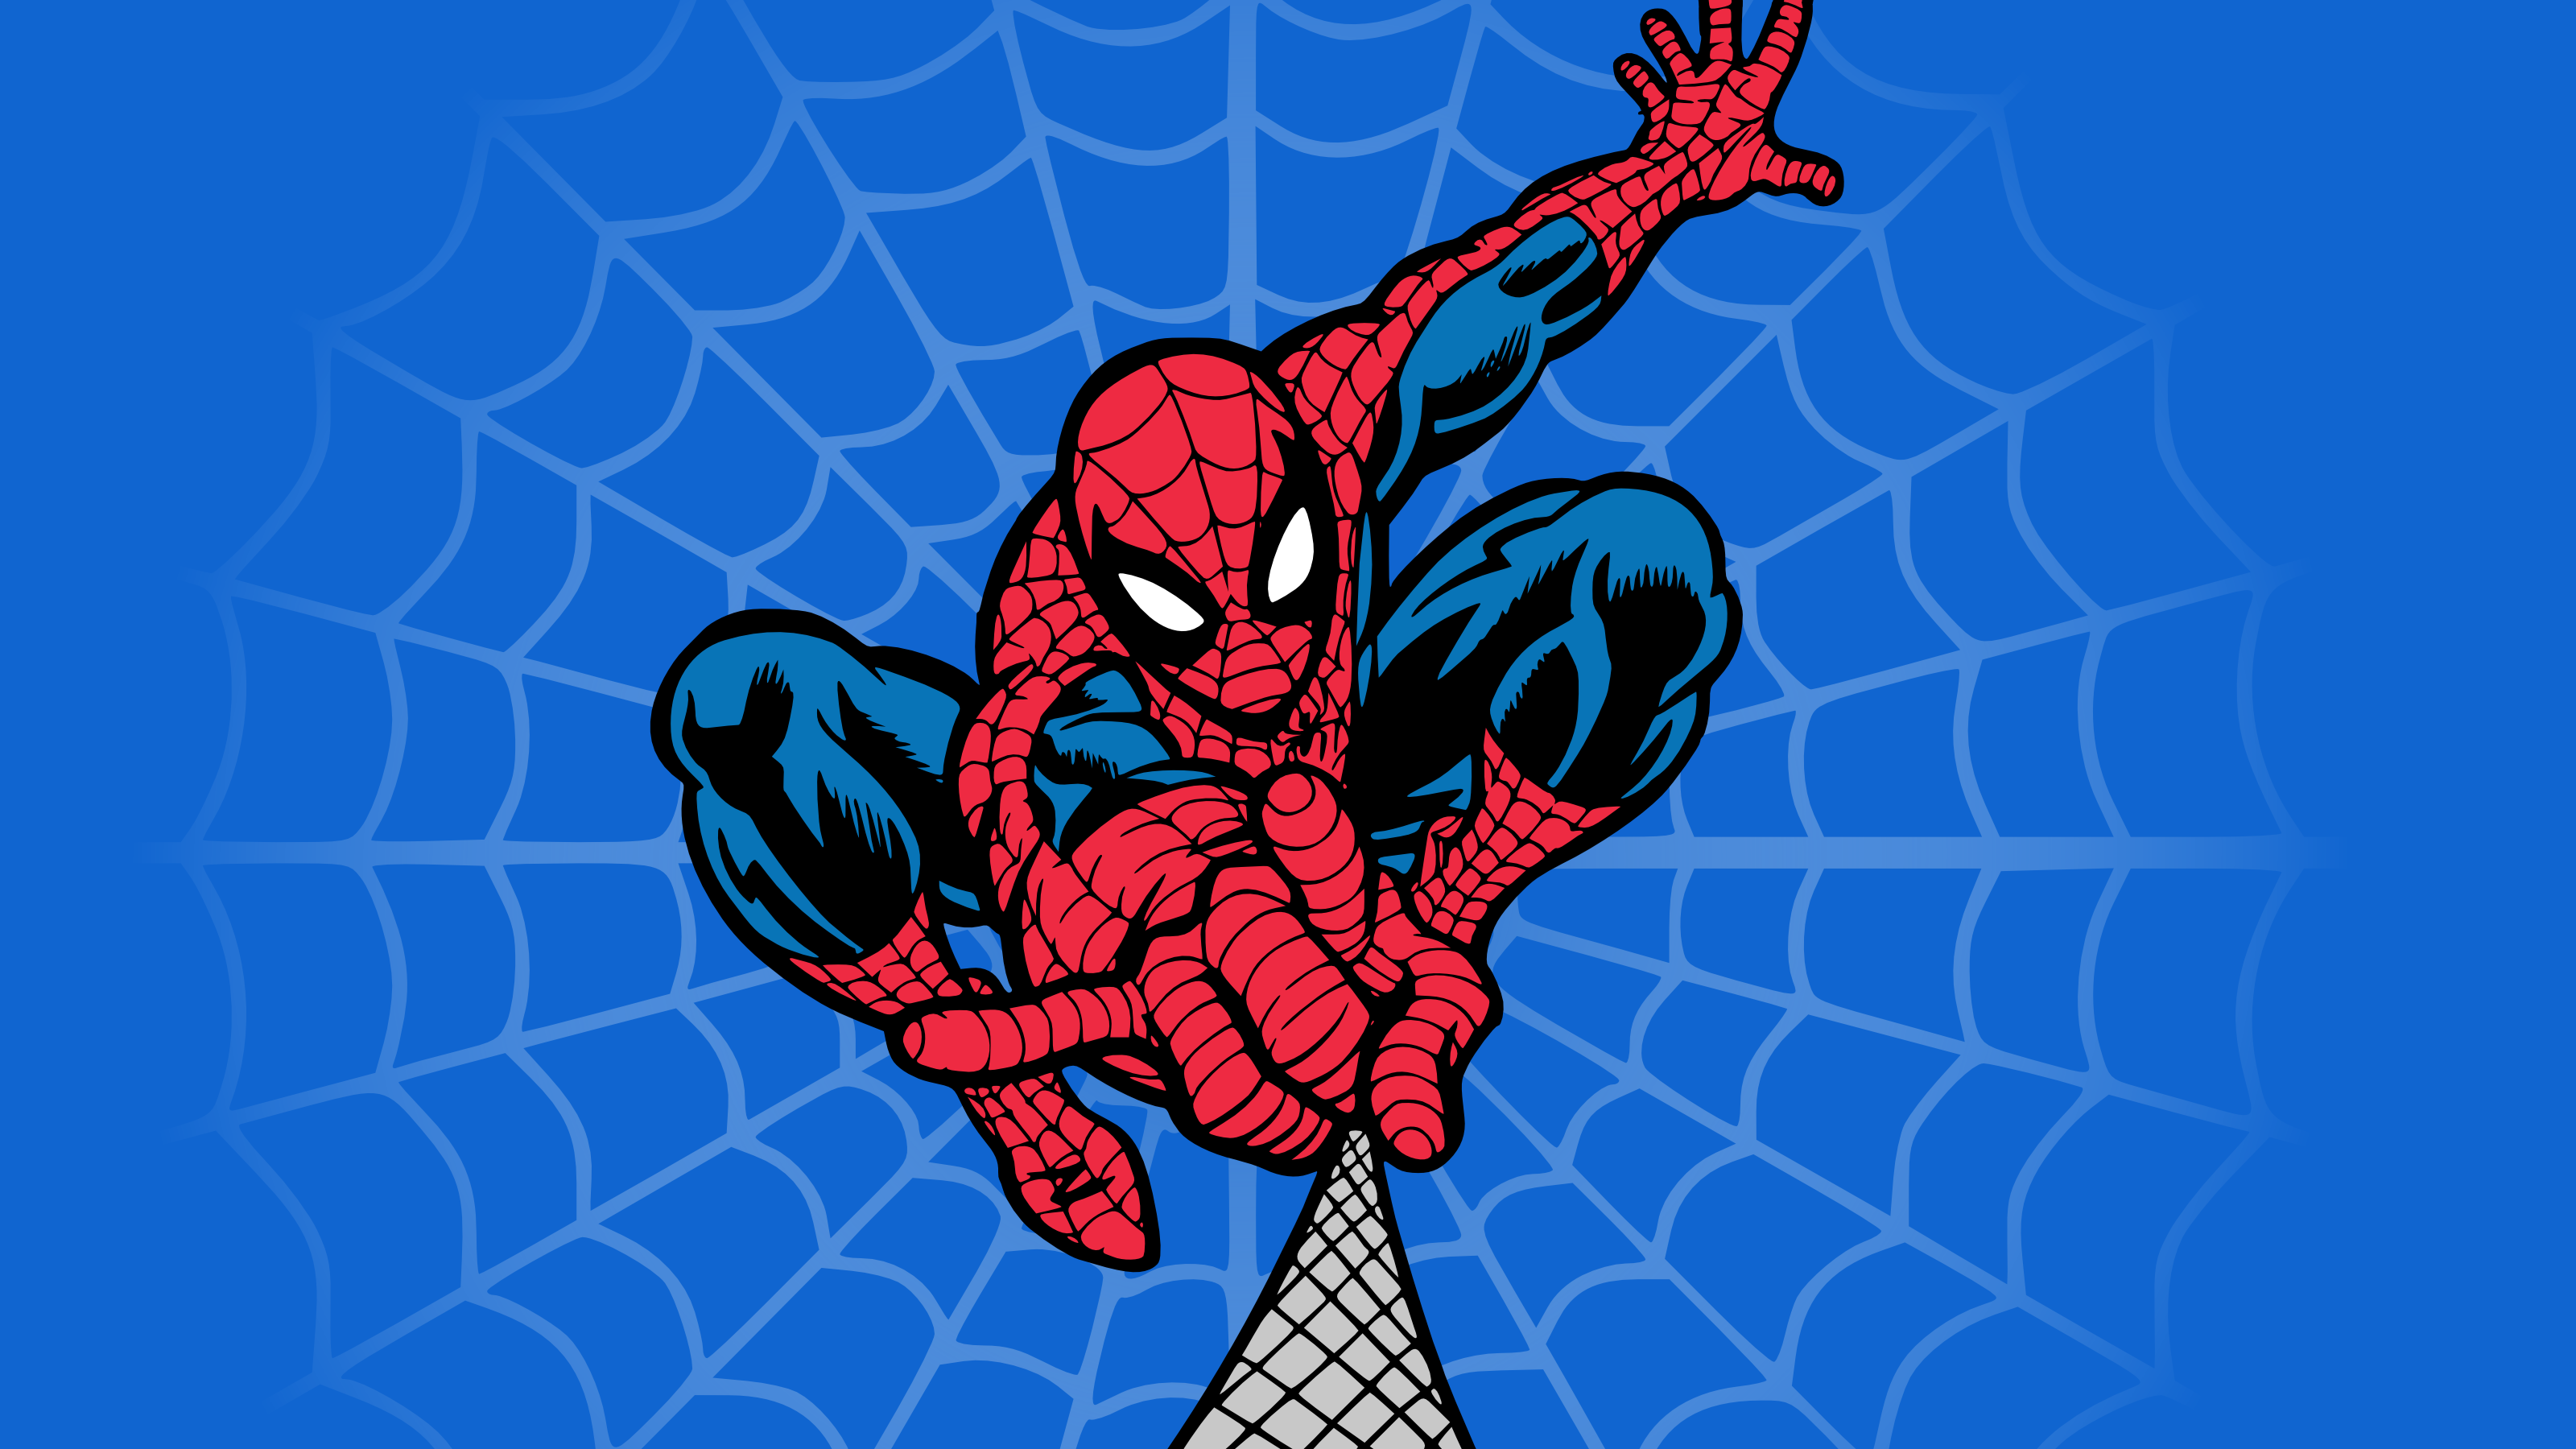 Spiderman Comics Spider-man Superhero illustrate wallpaper Wallpaper